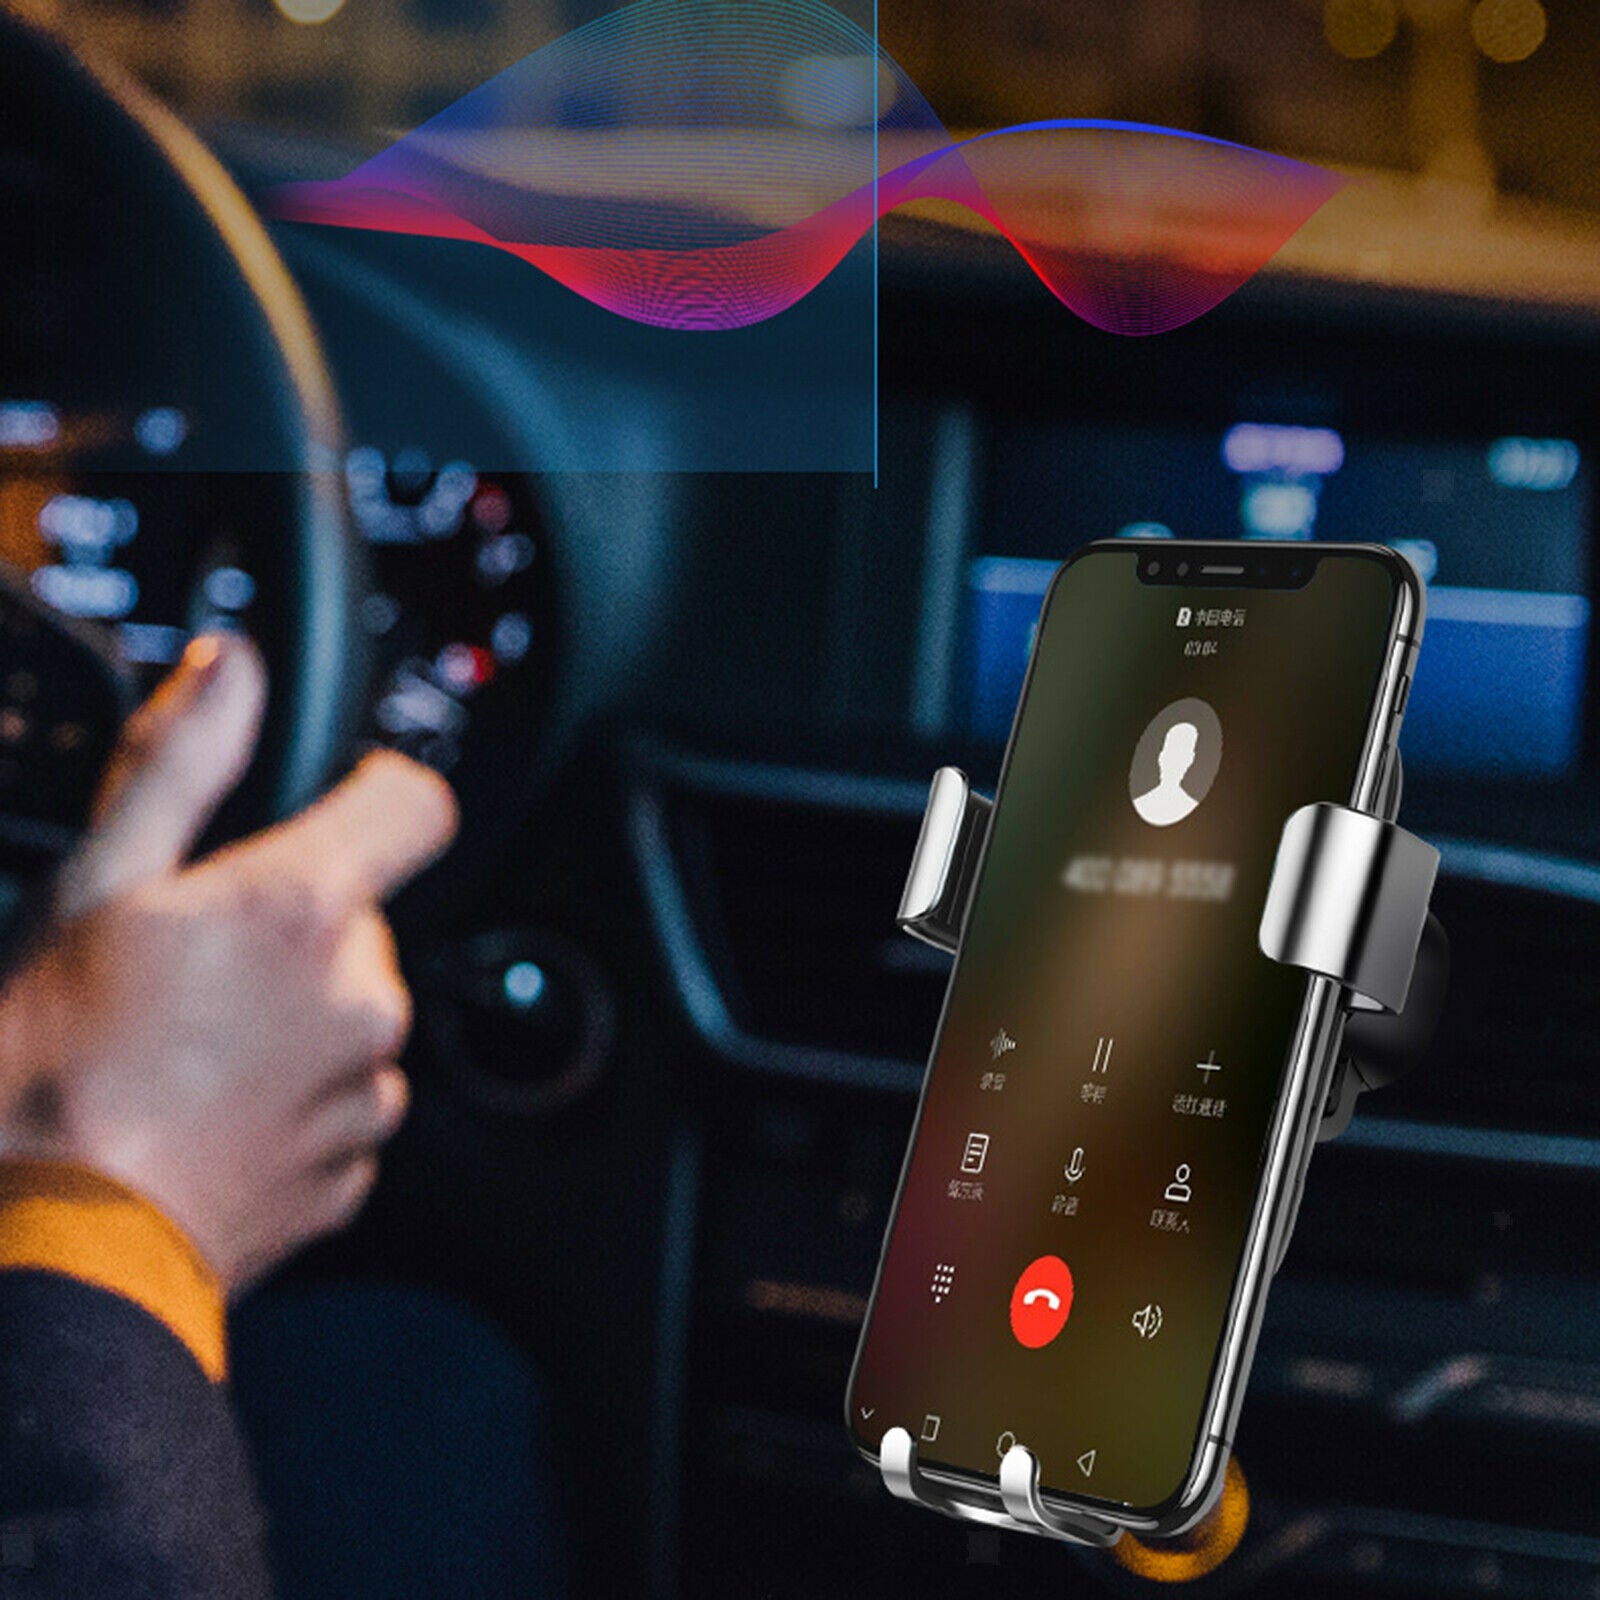 Portable Bluetooth V5.0 Receiver 3.5mm Jack for Car Home Stereo System